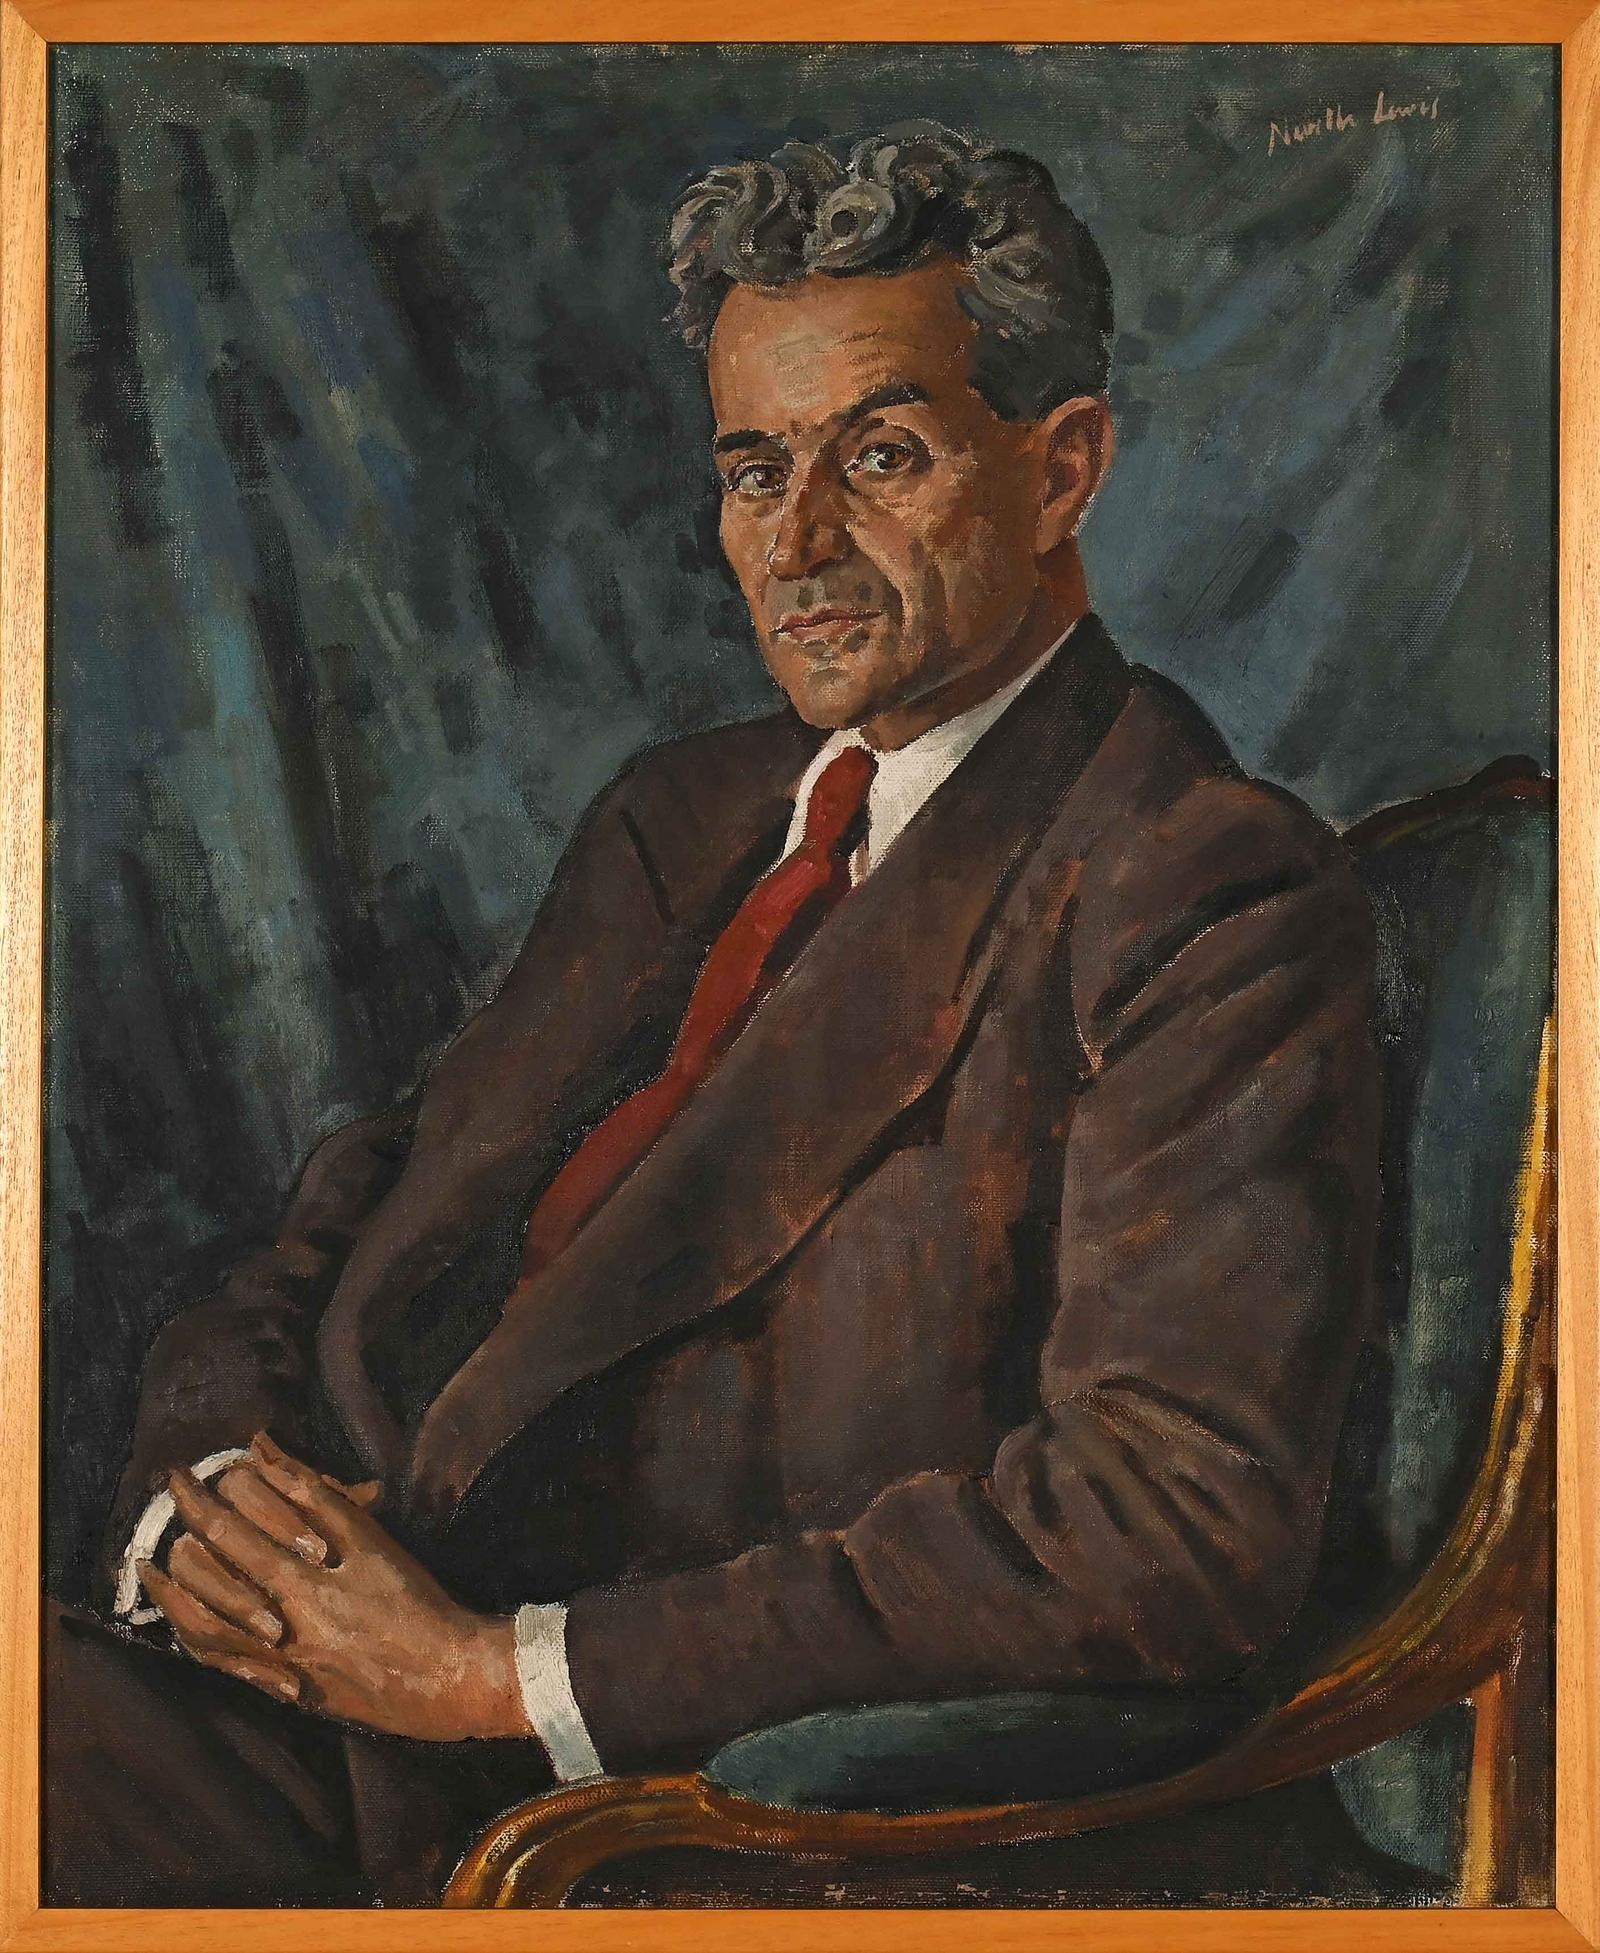 Portrait of a Gentleman - A. Neville Lewis